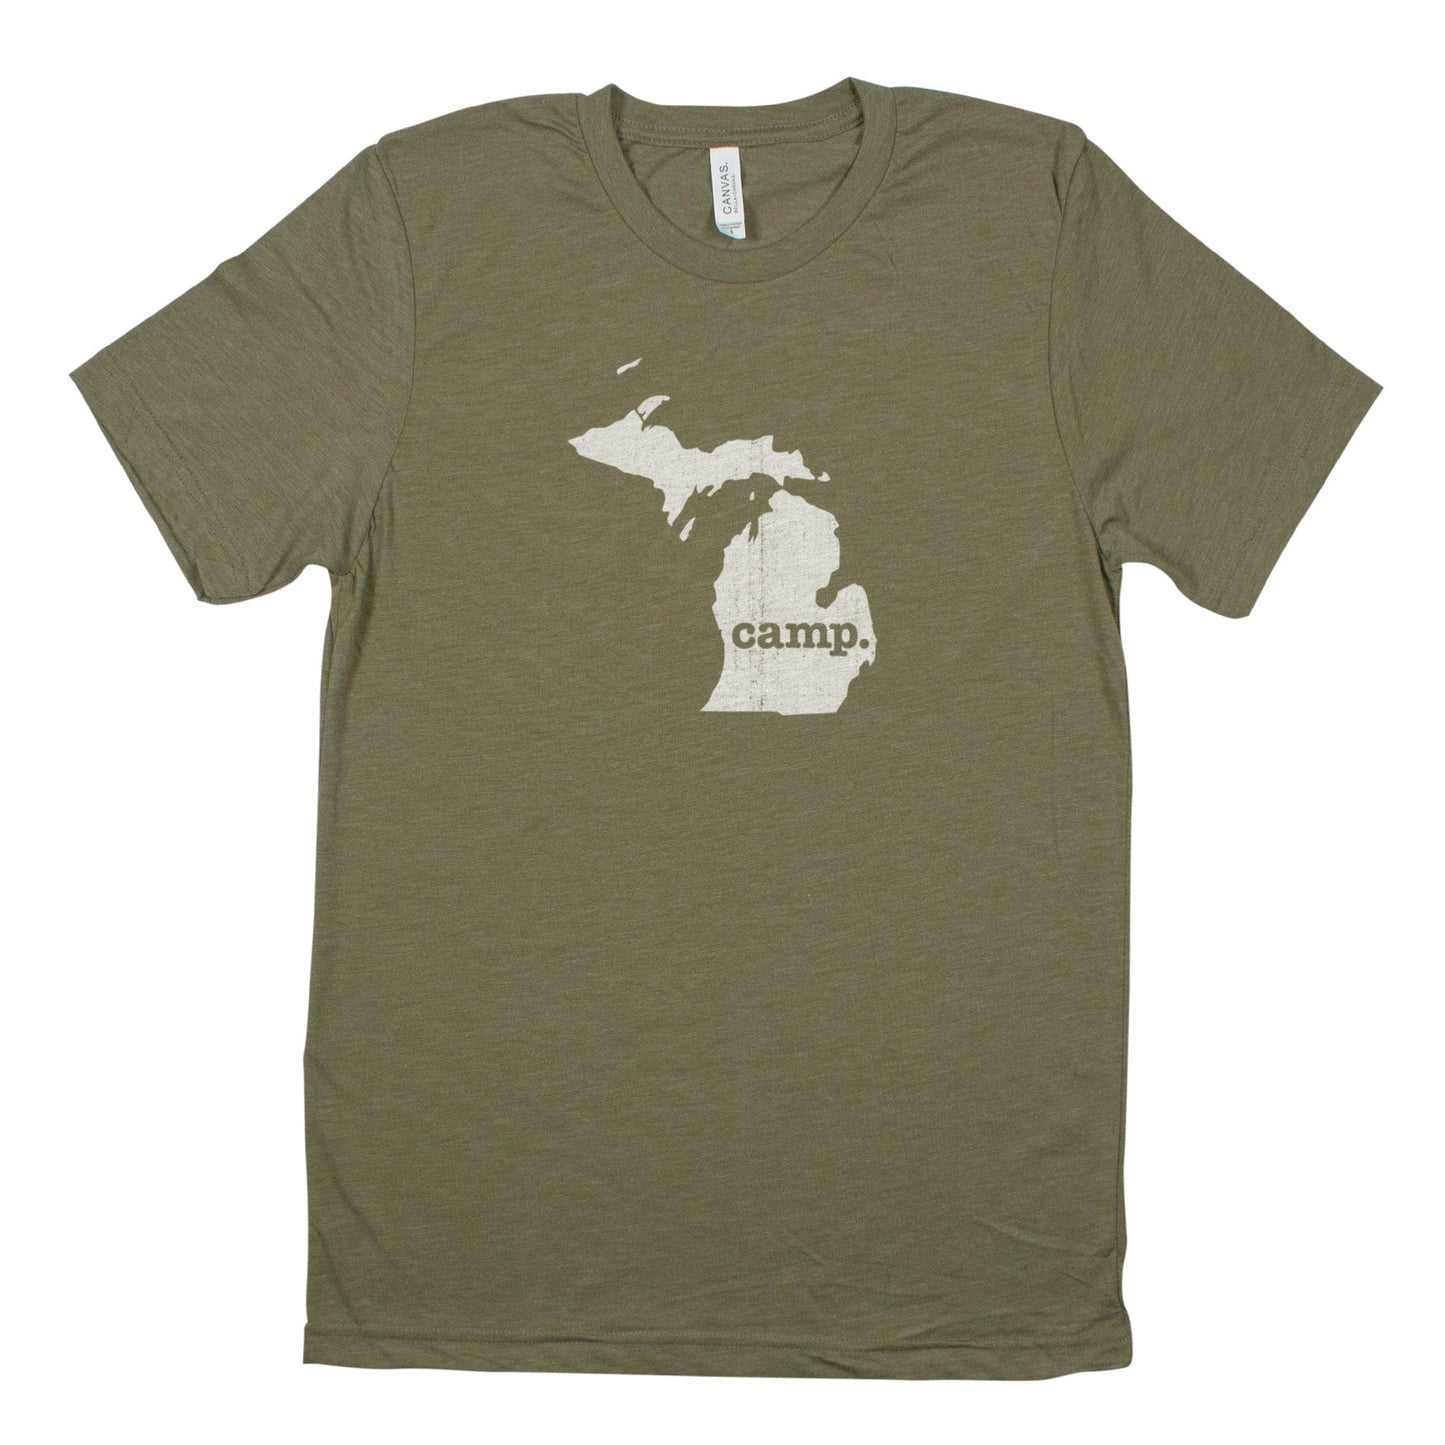 camp. Men's Unisex T-Shirt - Michigan